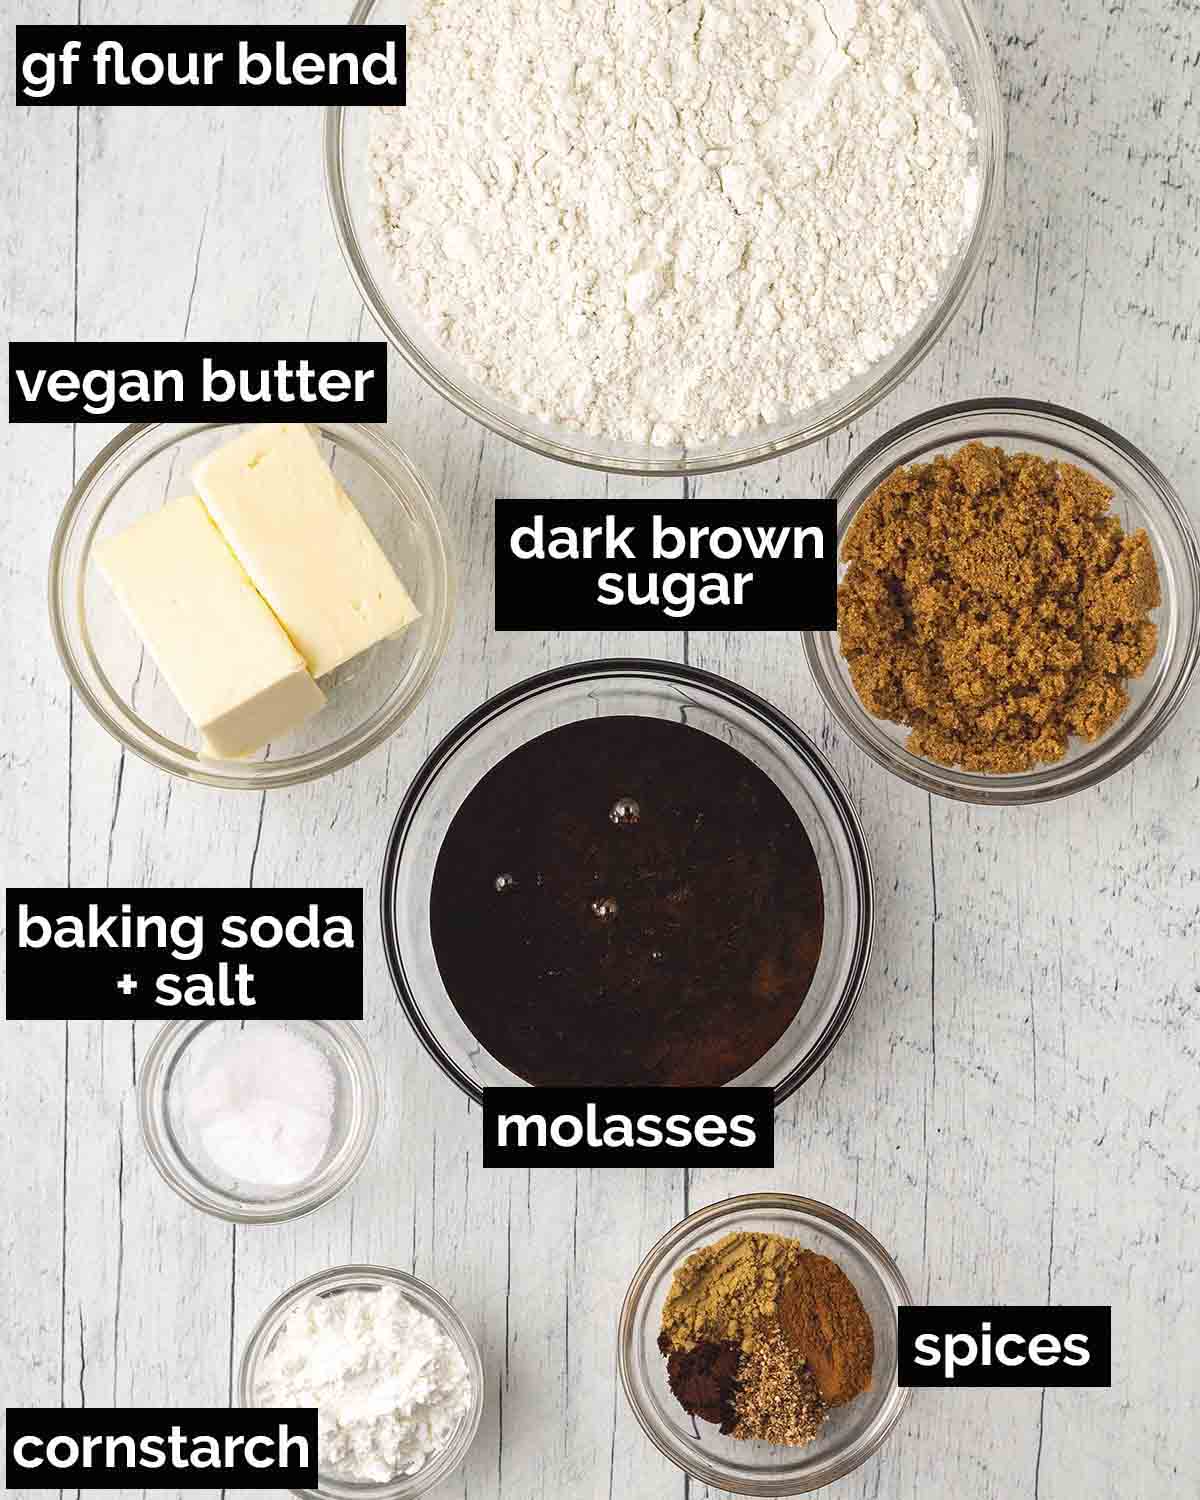 An overhead shot showing the ingredients needed to make vegan gluten-free gingerbread cookies.